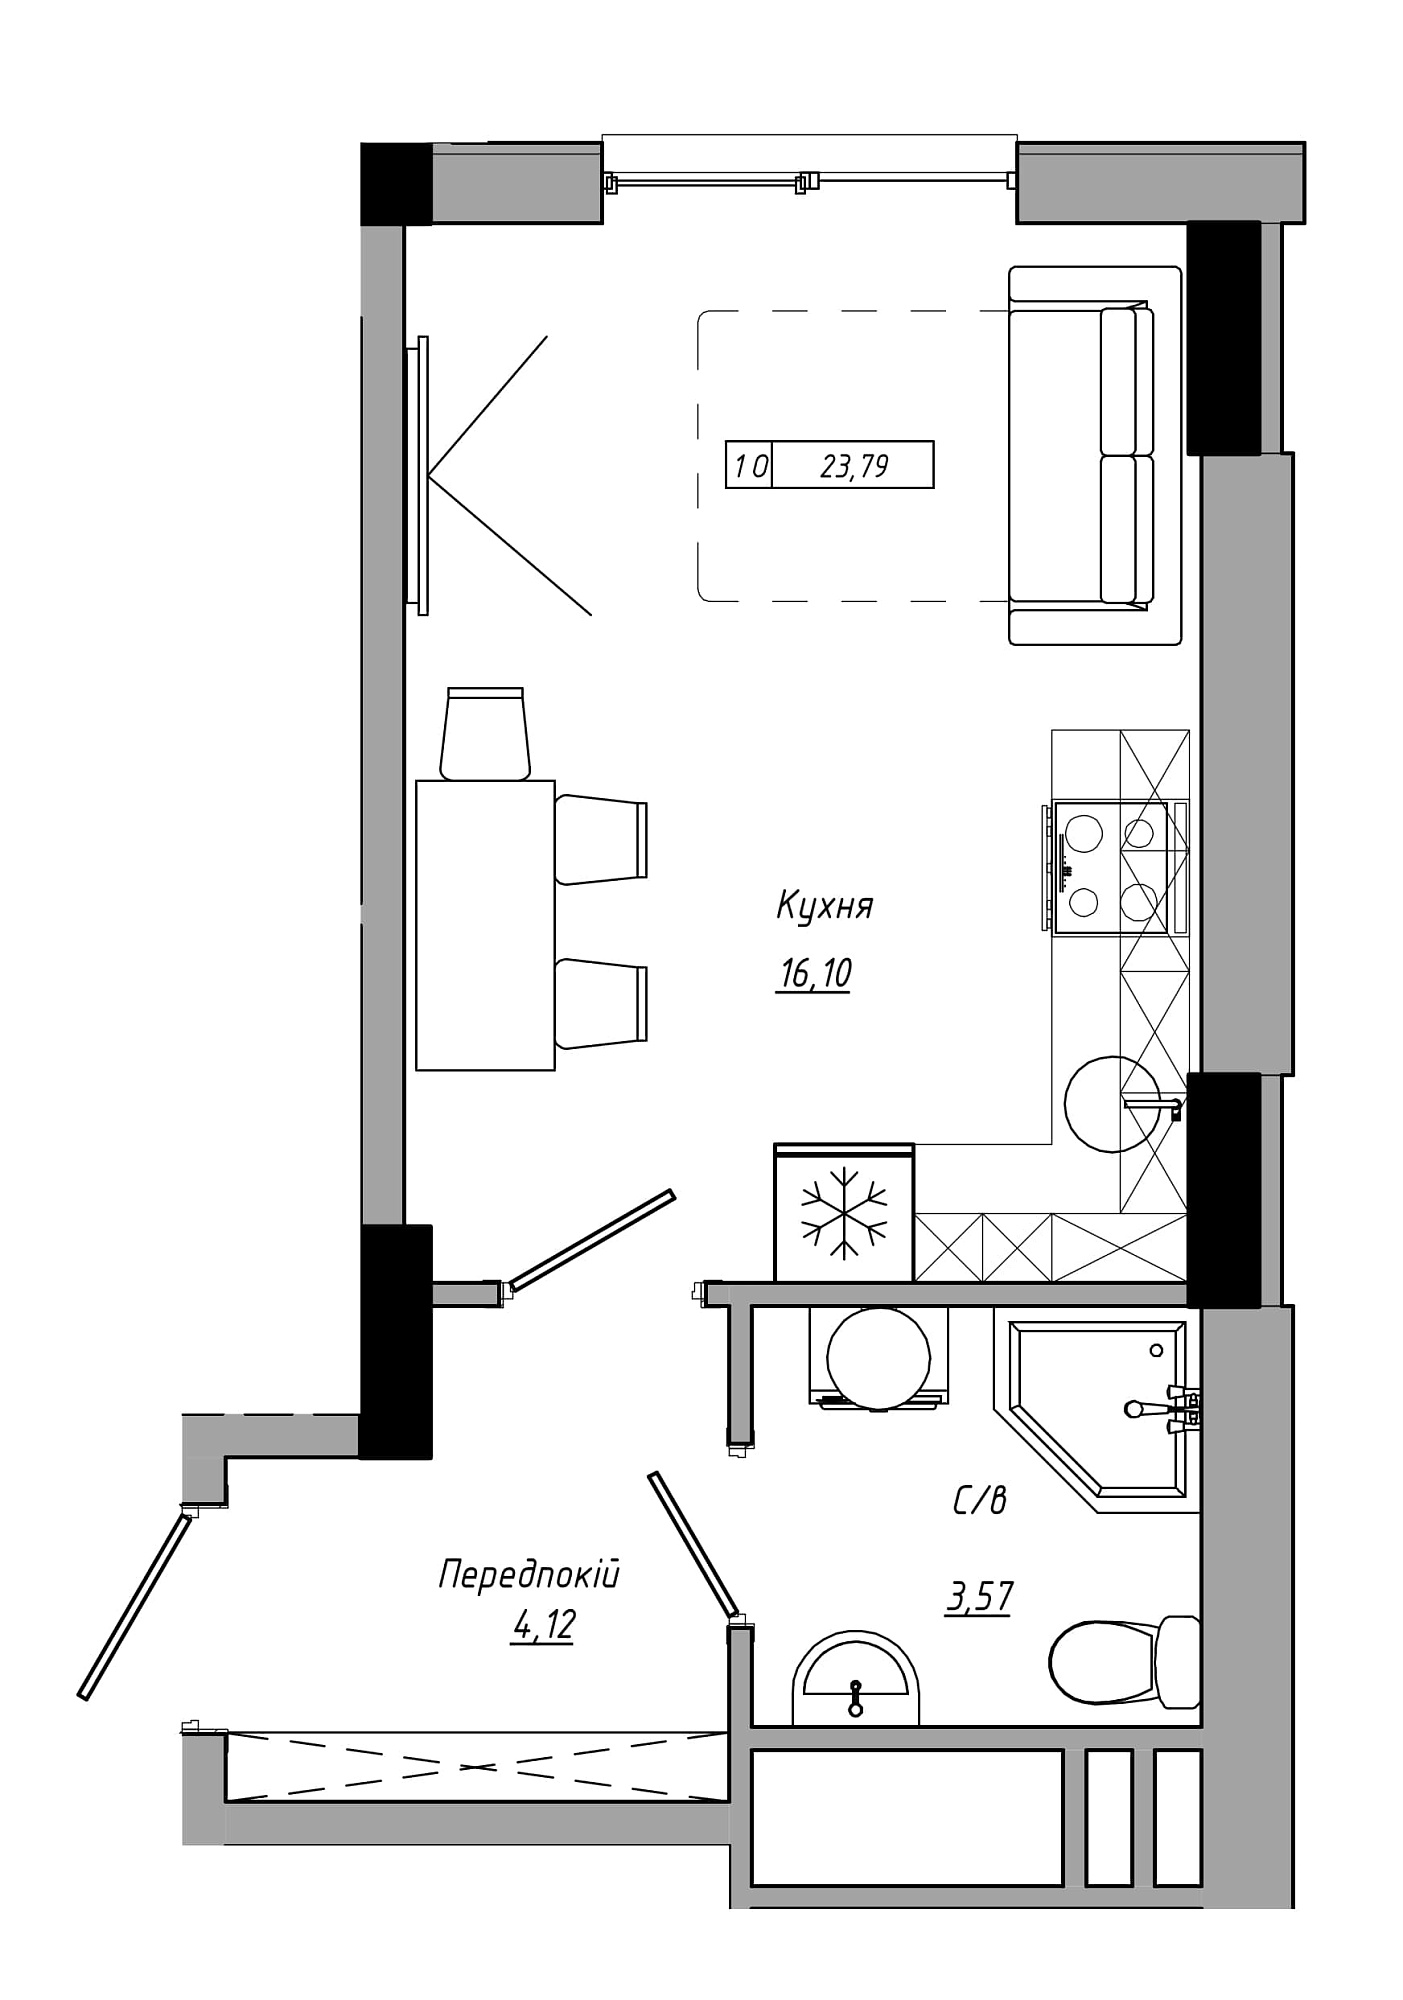 Planning Smart flats area 23.79m2, AB-21-12/00017.